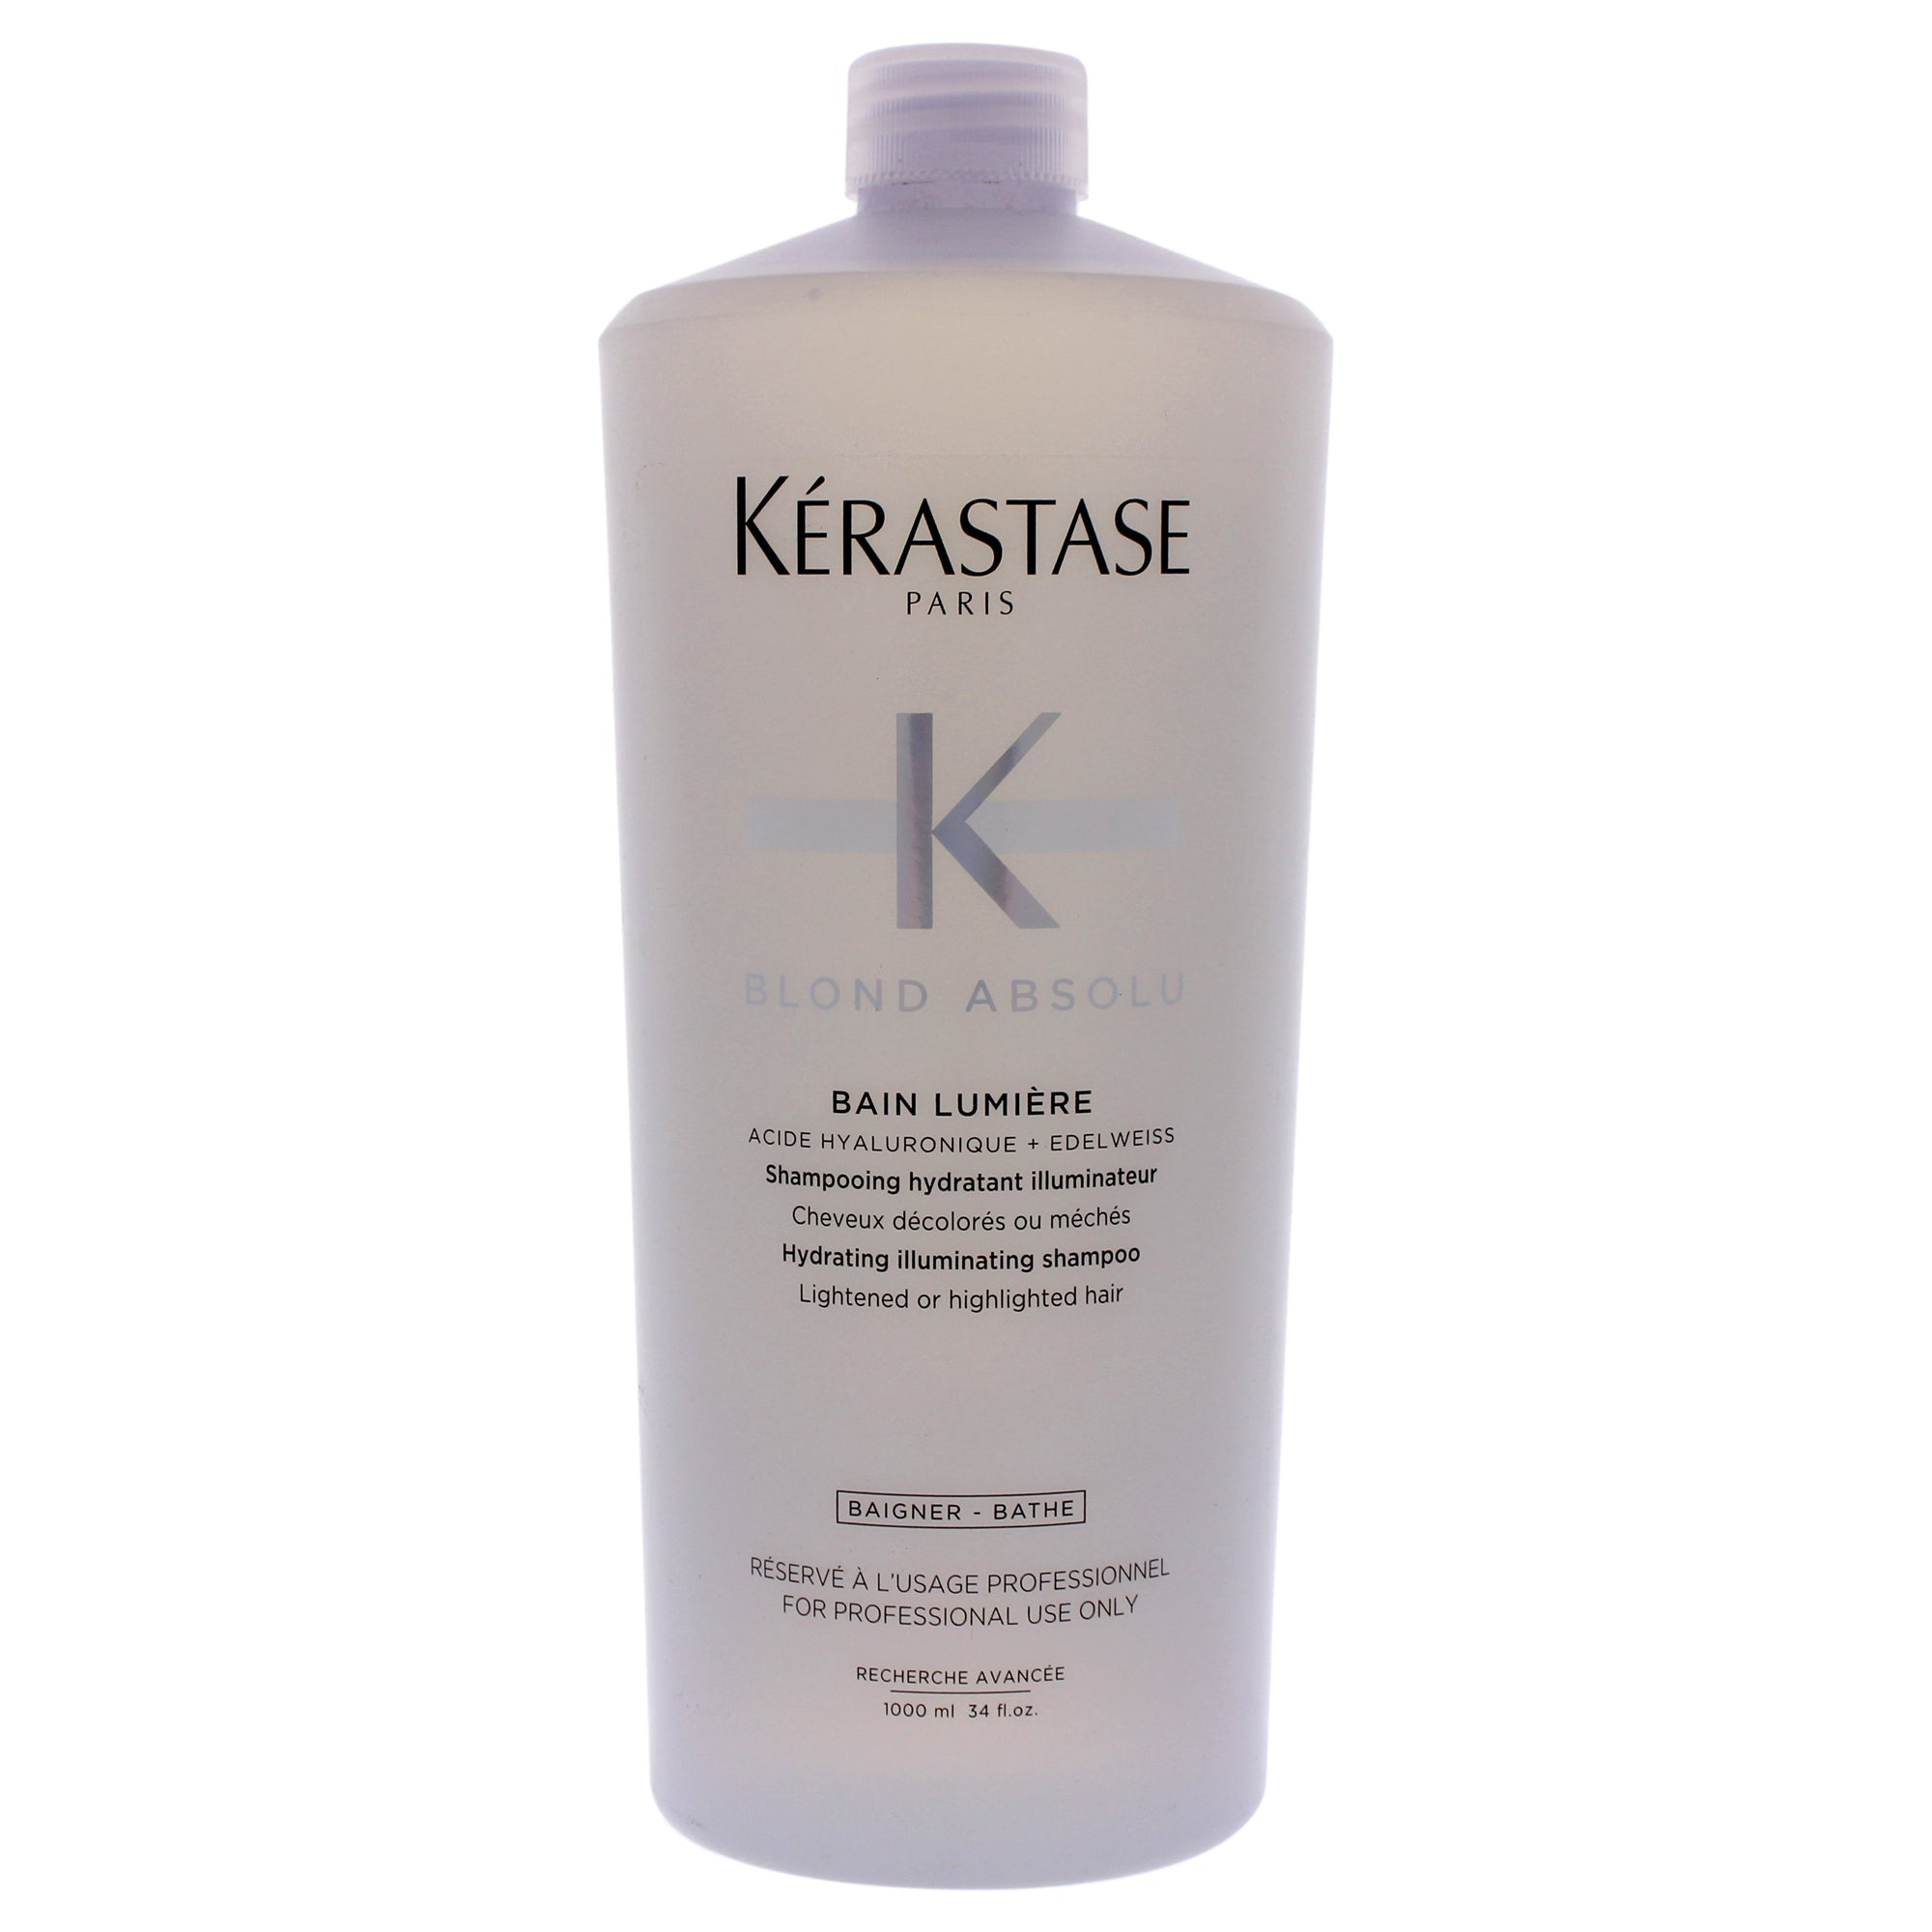 Blonde Absolu Bain Lumiere Shampoo by Kerastase for Unisex - 34 oz Shampoo